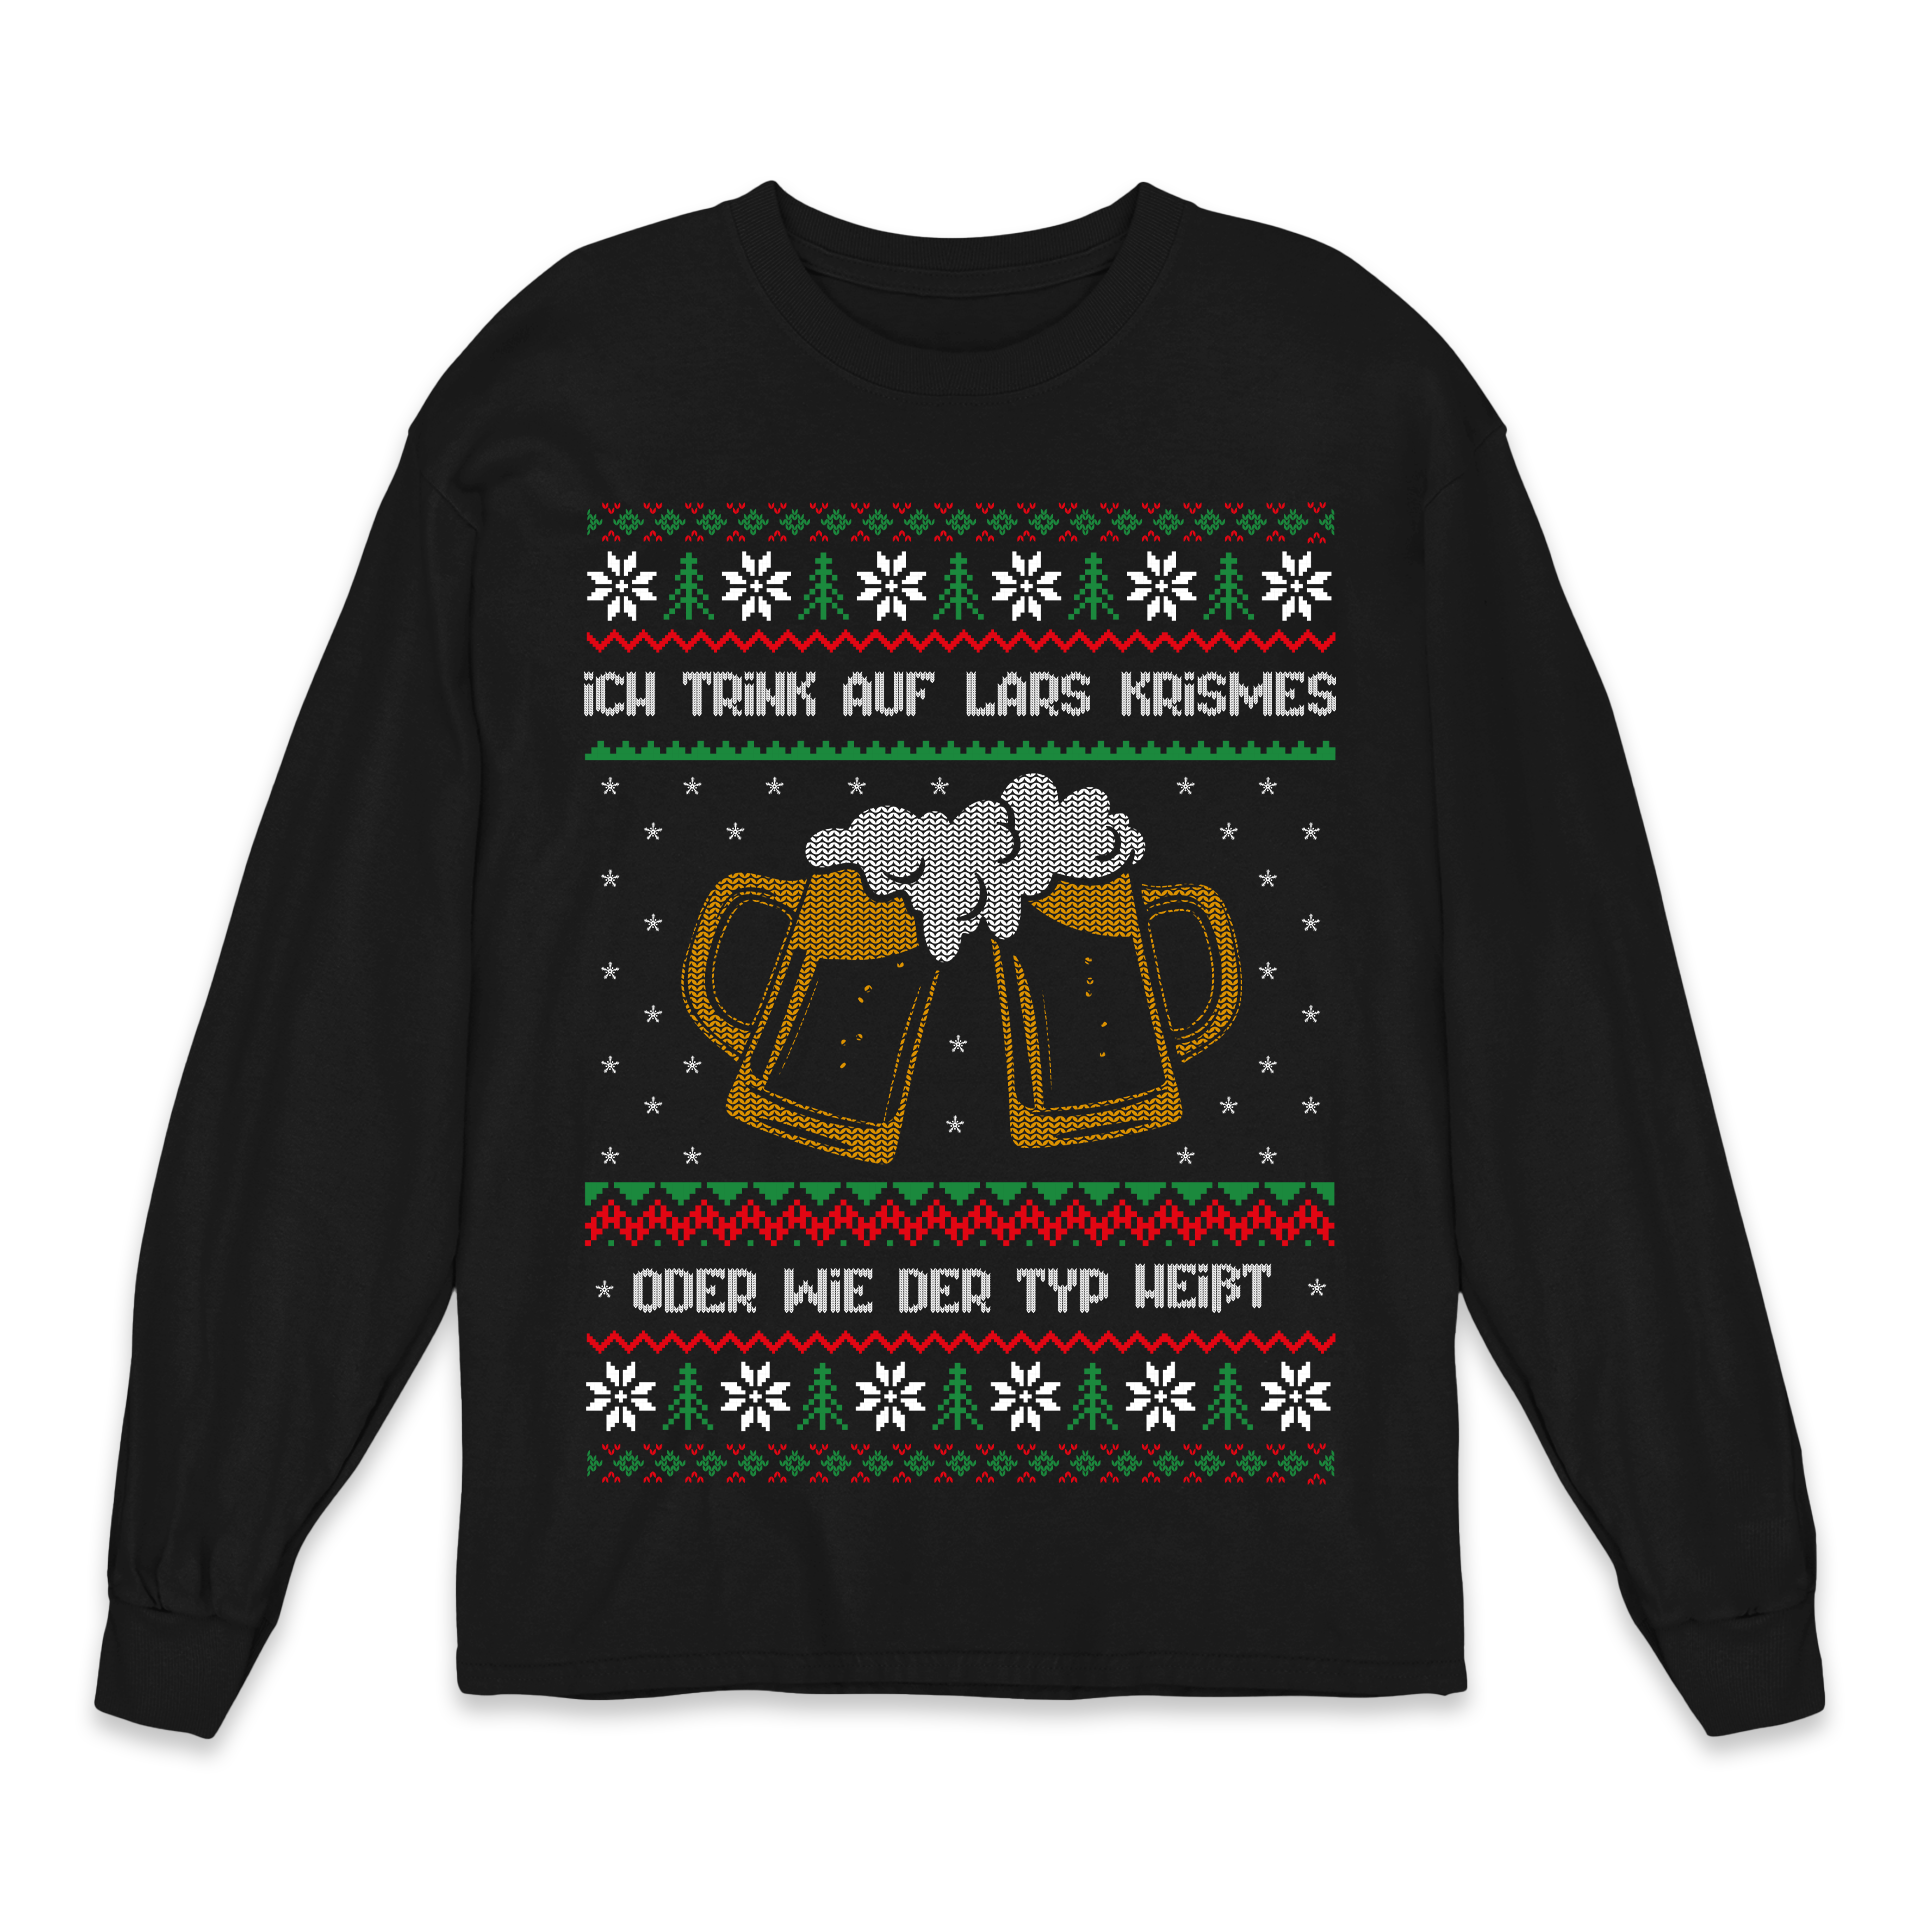 Lars Krismes - Christmas Sweater